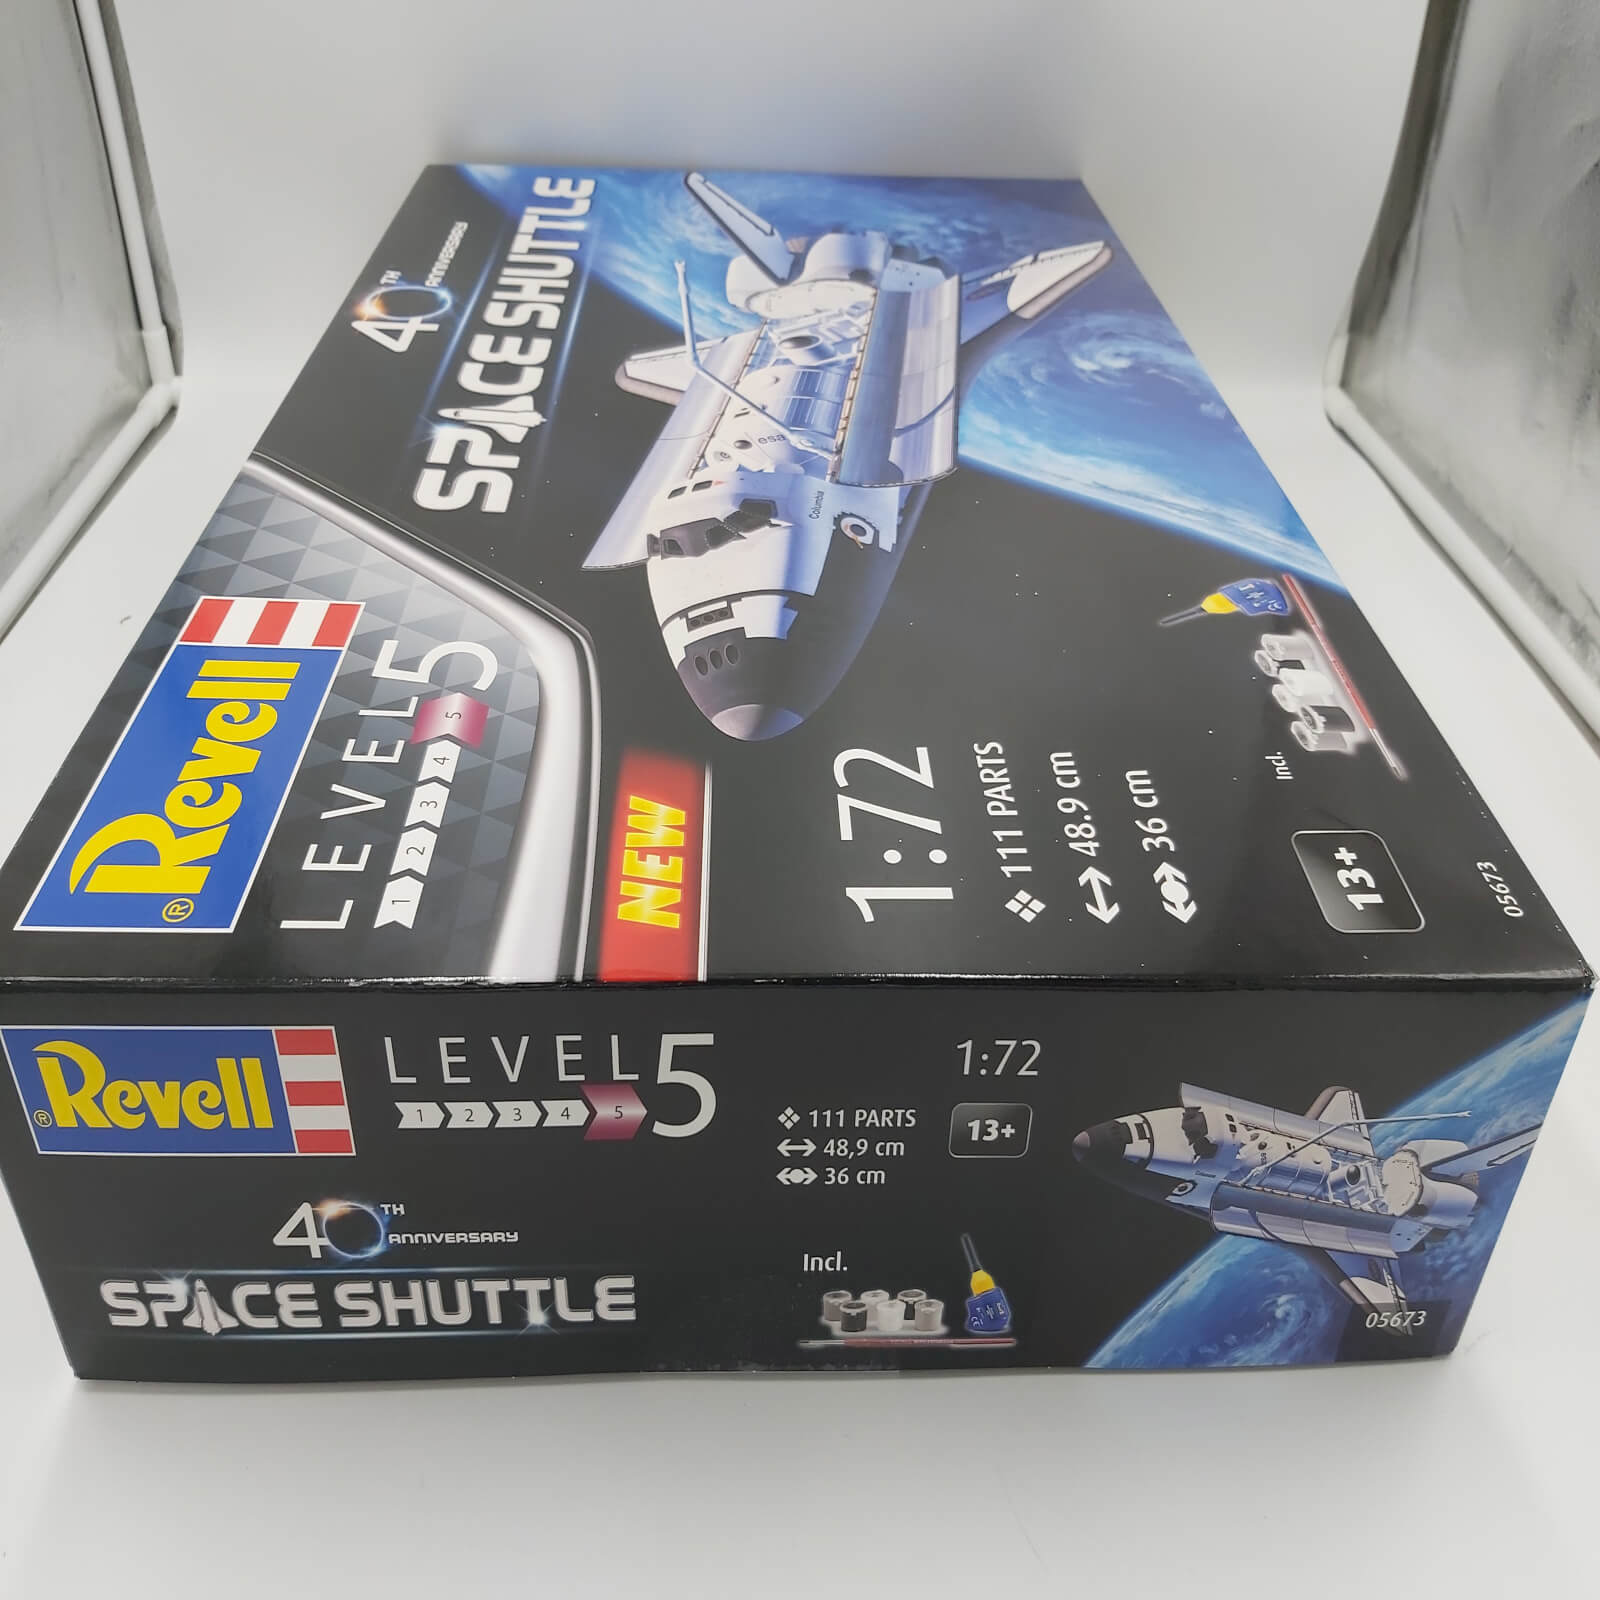 Revell Space Shuttle 40th Anniversary 1:72 Gift Set Spacecraft Model Building Kit Alternate 1